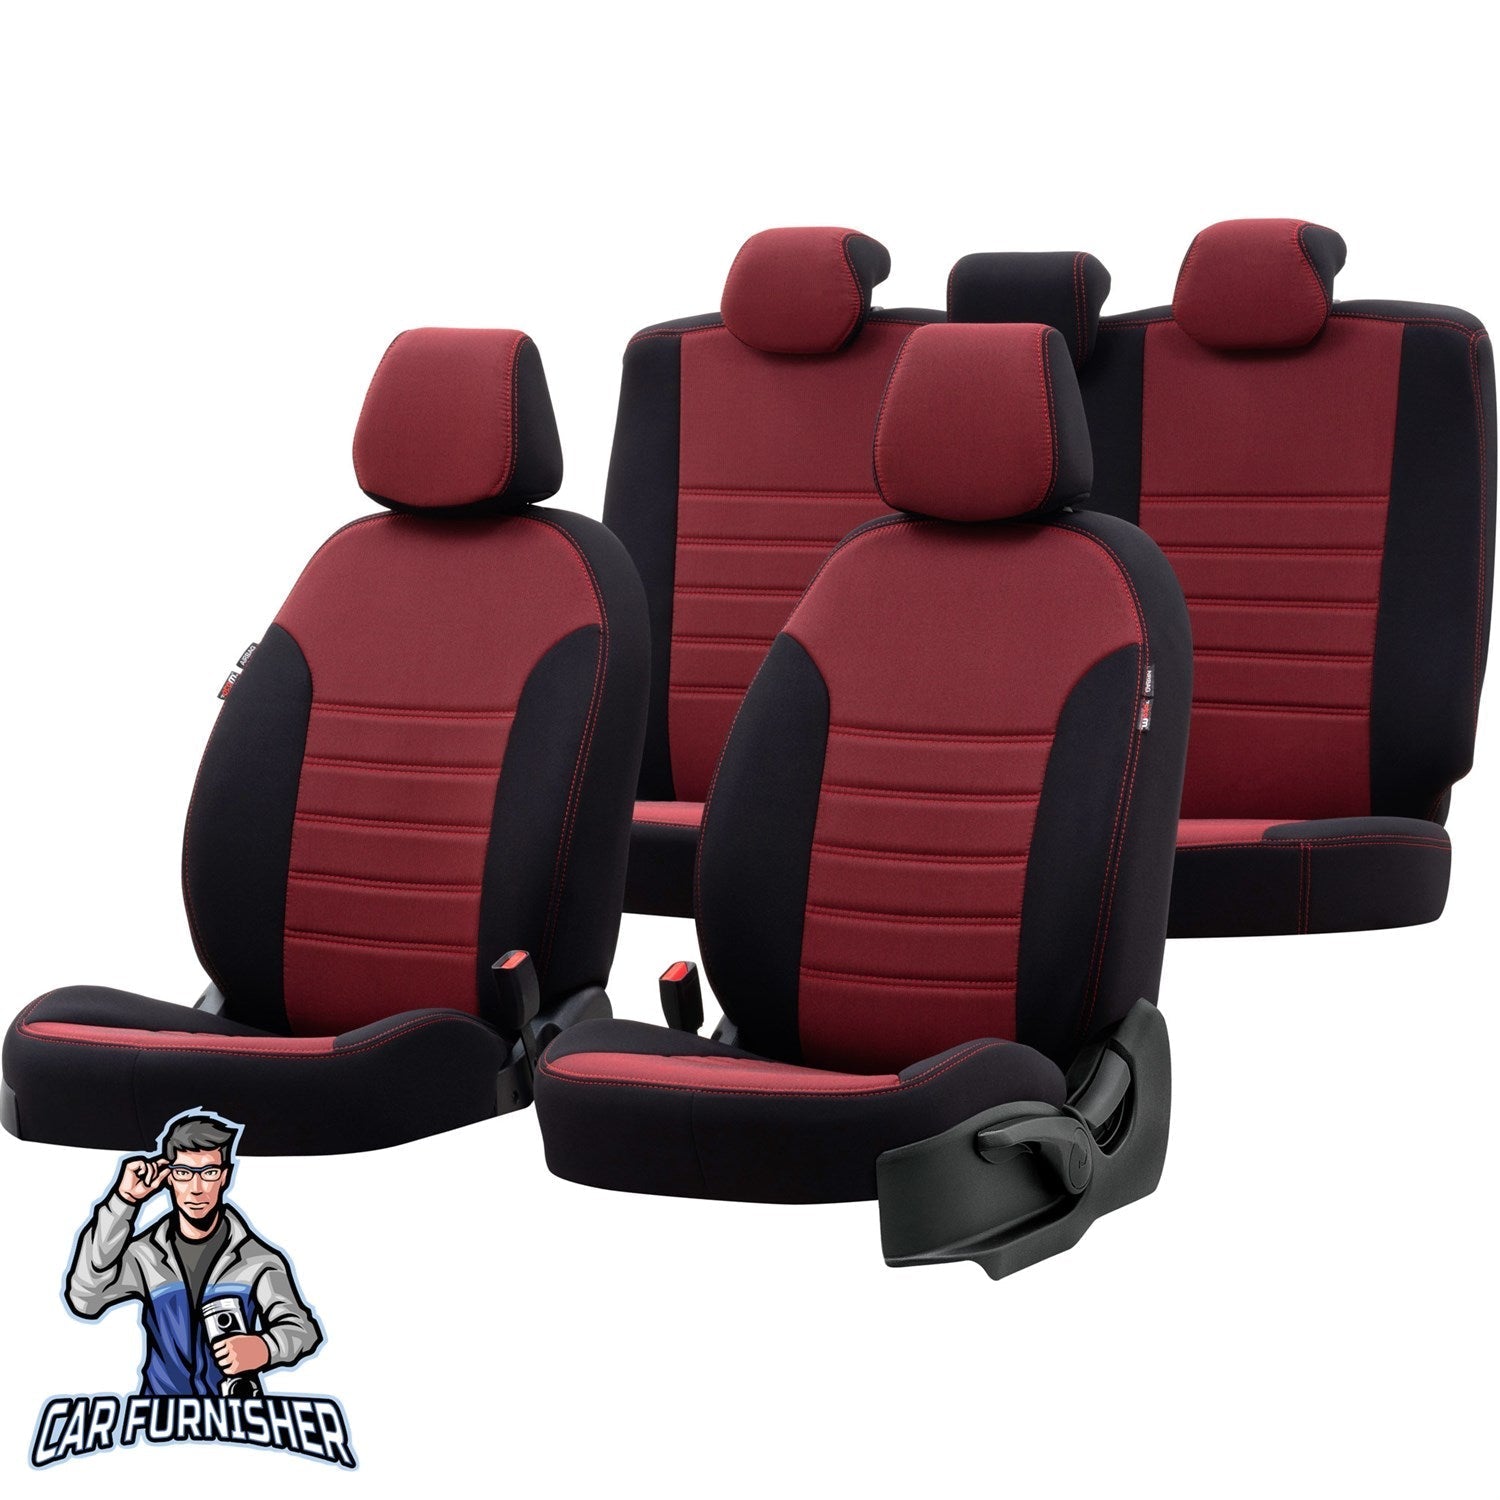 Chevrolet Captiva Car Seat Cover 2006-2011 LS/LT/LTX-Z Original Red Full Set (5 Seats + Handrest) Fabric